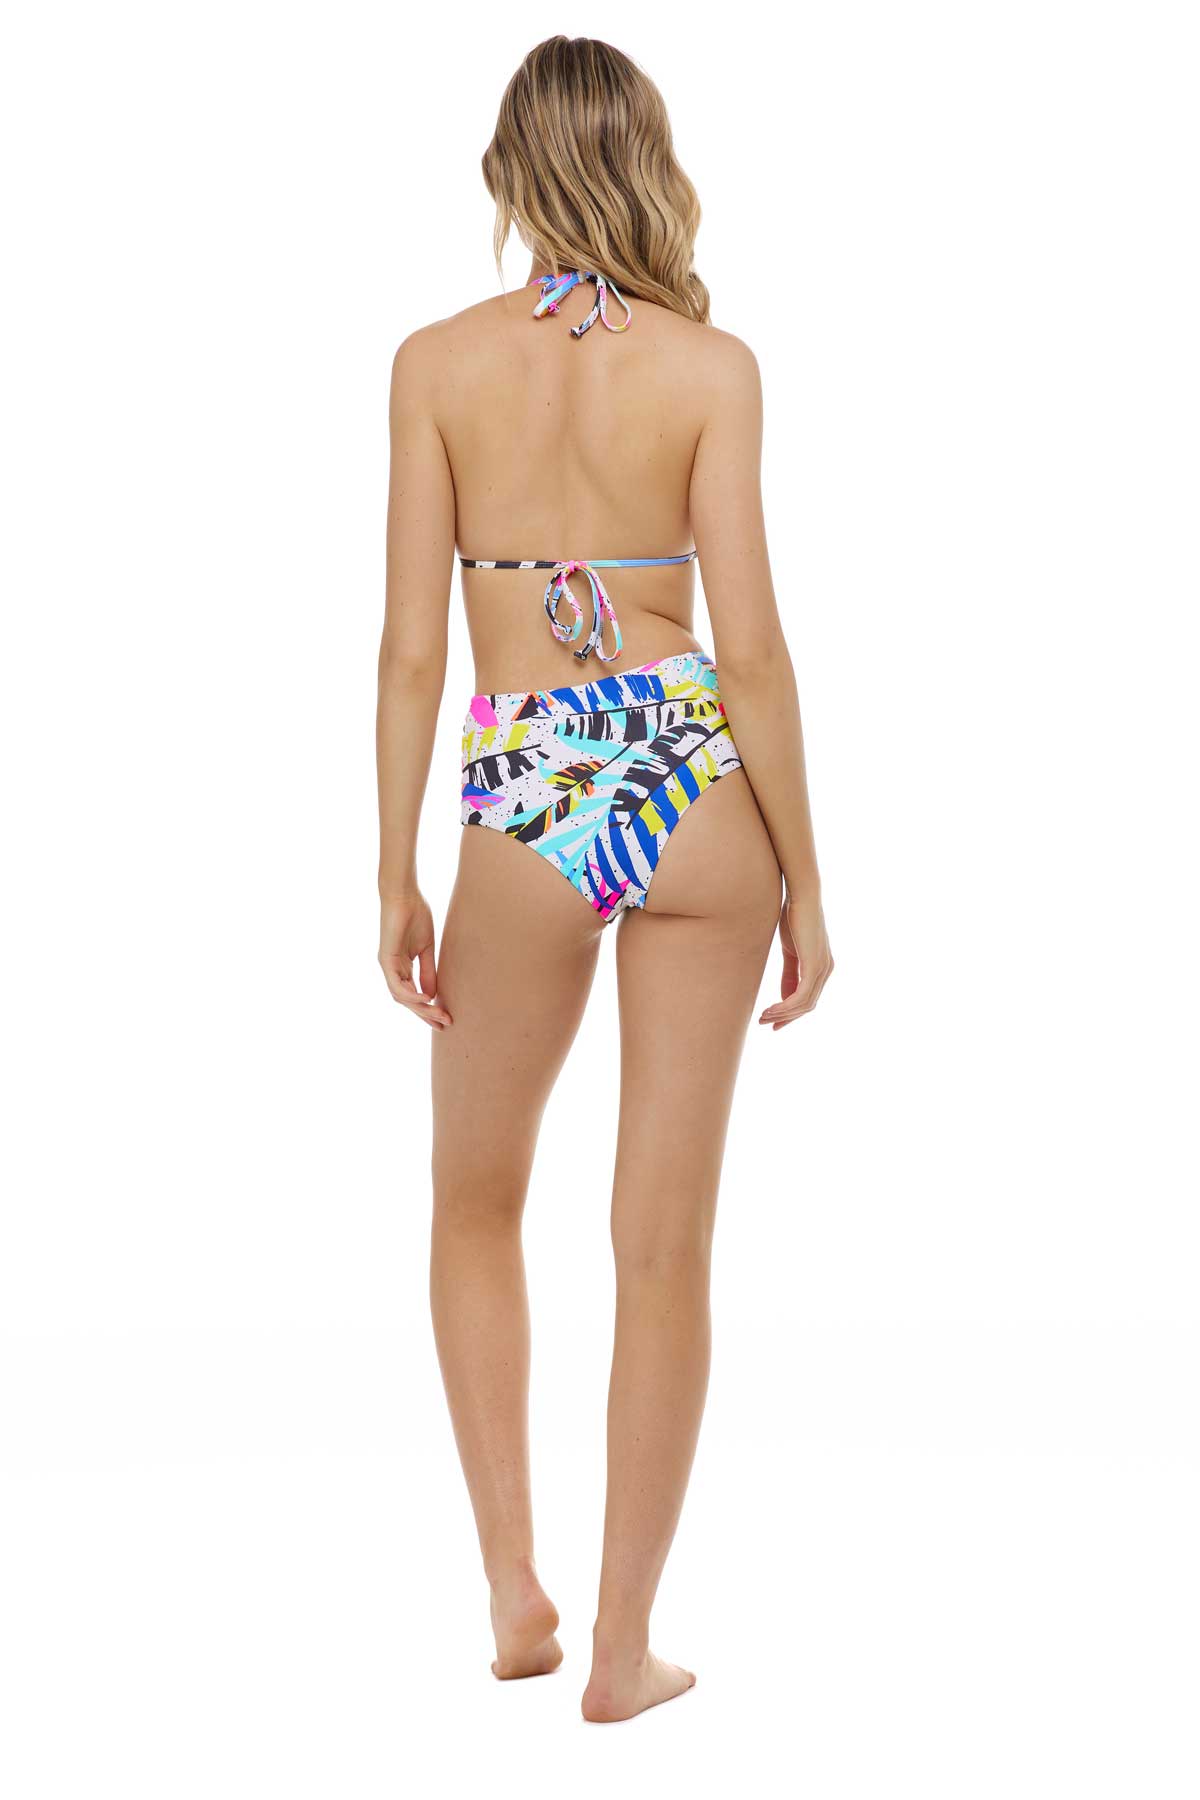 Body Glove Colorbox Olivia Wide Band Triangle Bikini Top